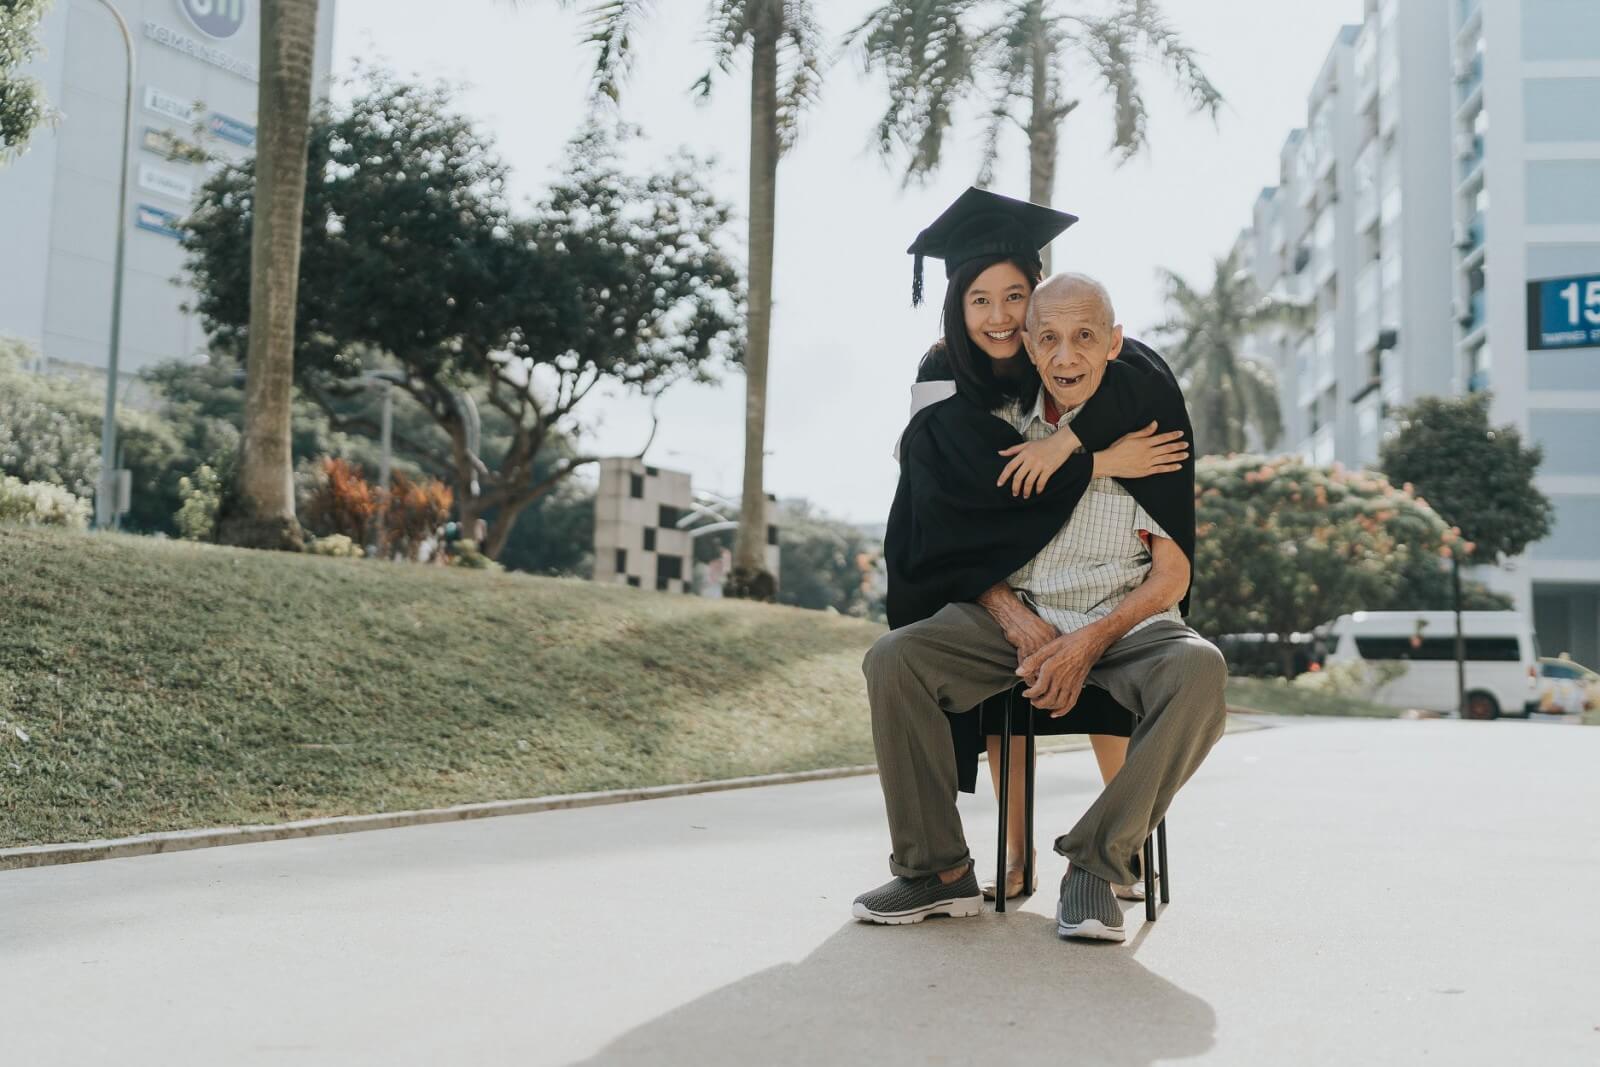 Heartwarming Photos Of S'porean Student Who Flew Back Home to Take Grad Photos With Grandpa Go Viral - WORLD OF BUZZ